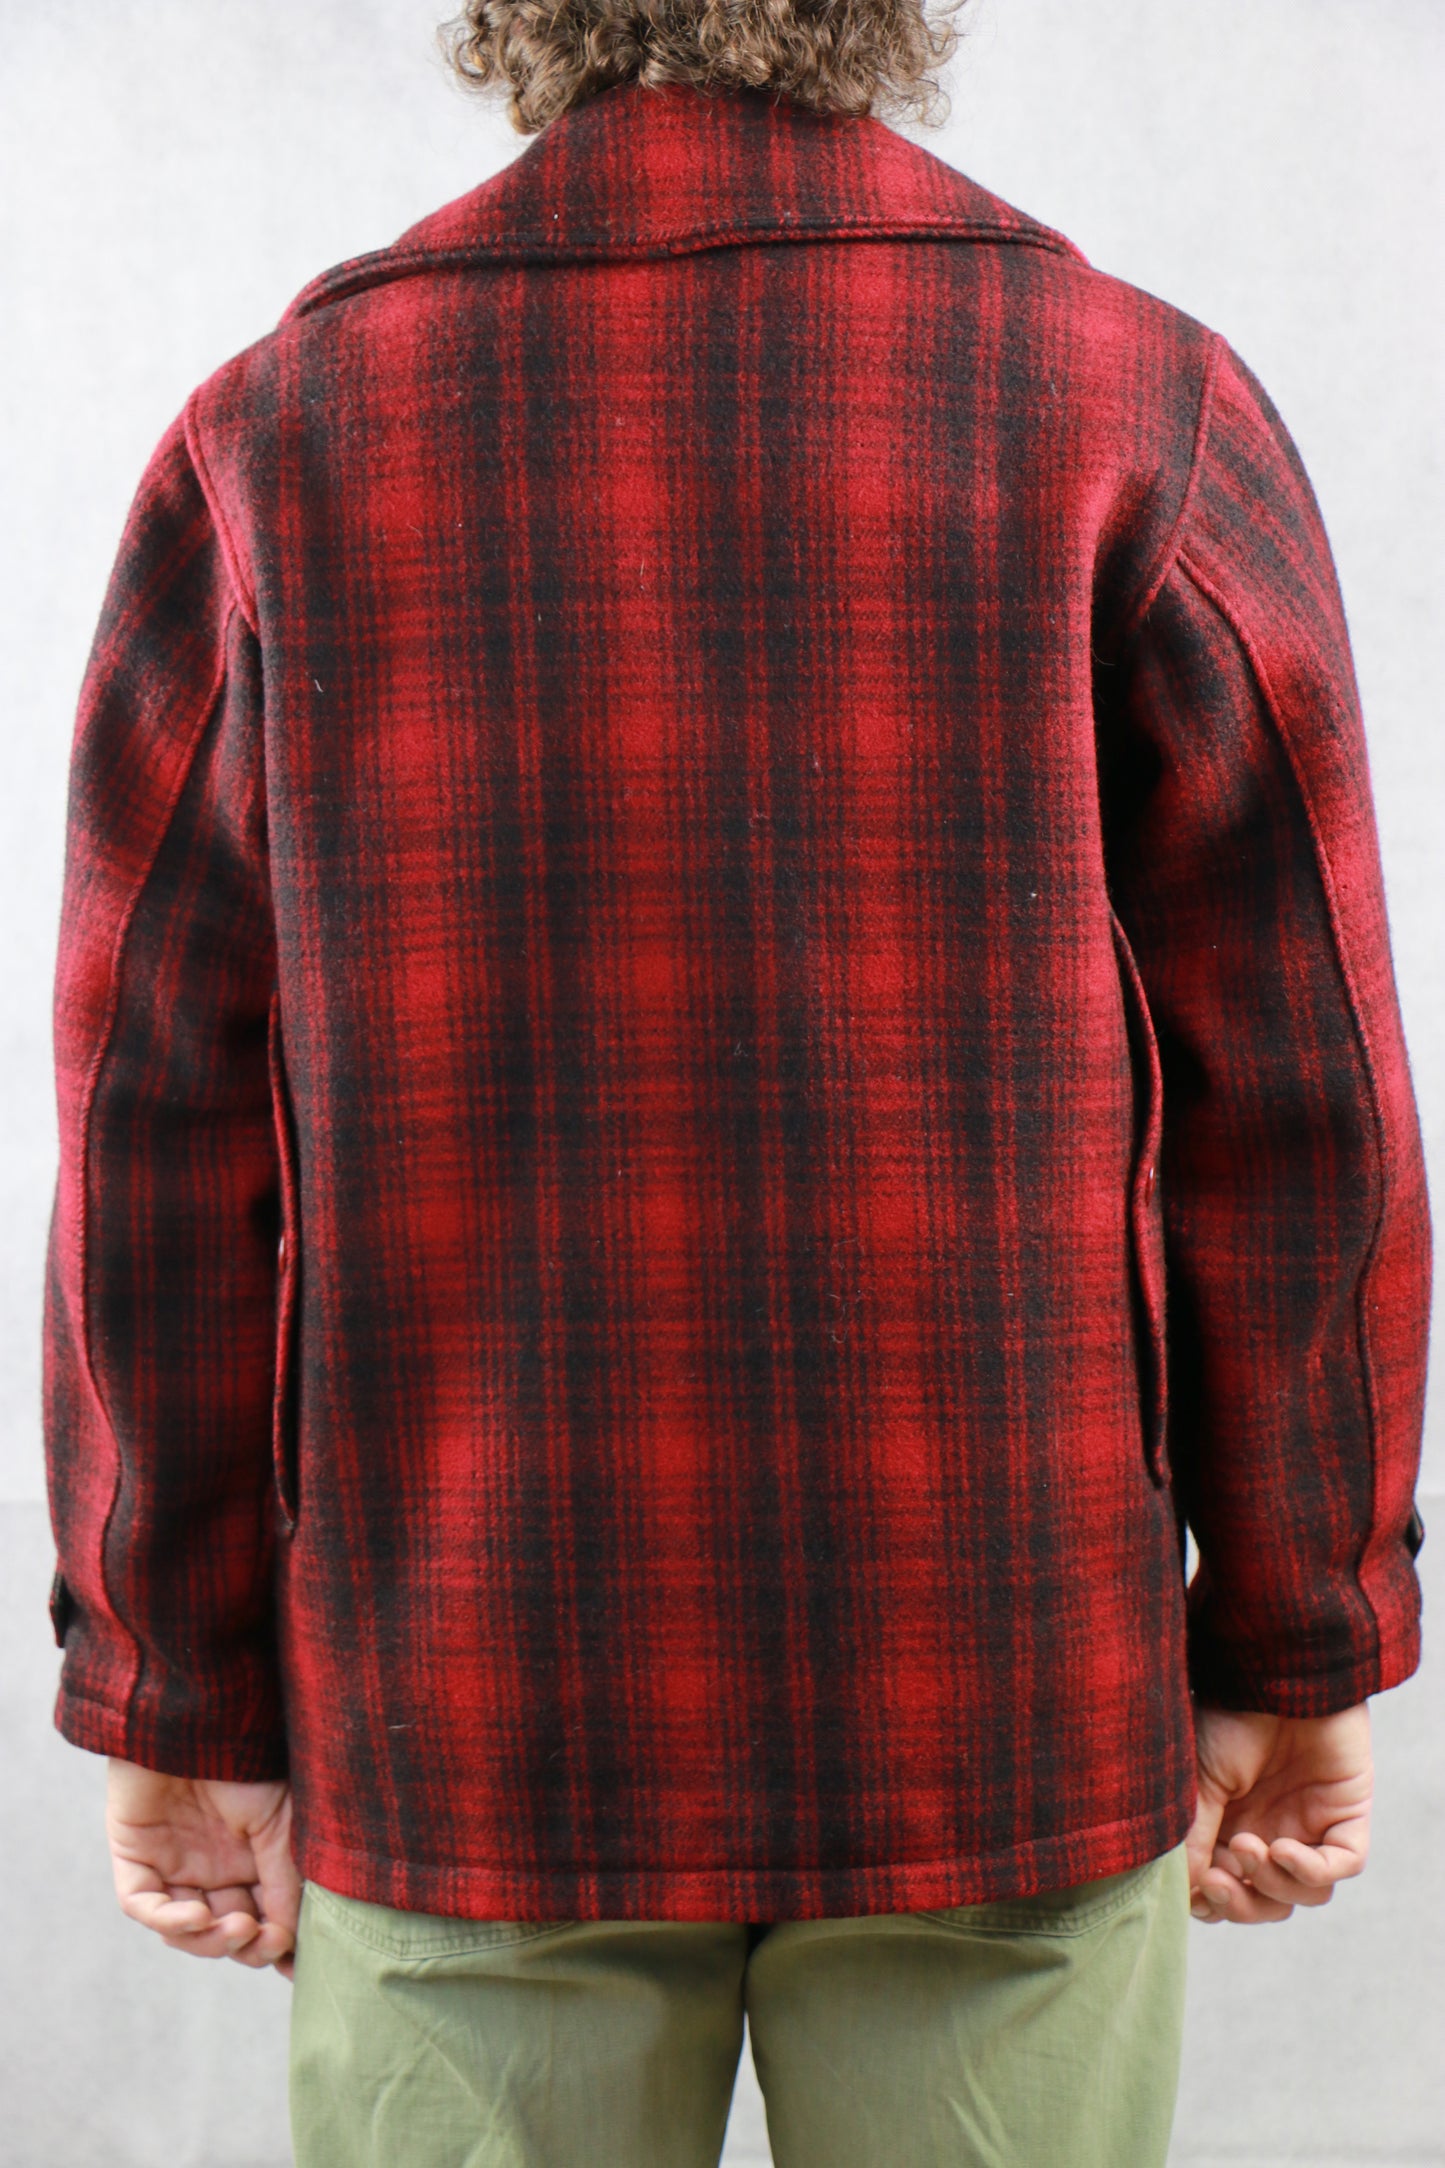 Abercrombie & Fitch Red-Black Plaid Hunting Jacket - vintage clothing clochard92.com